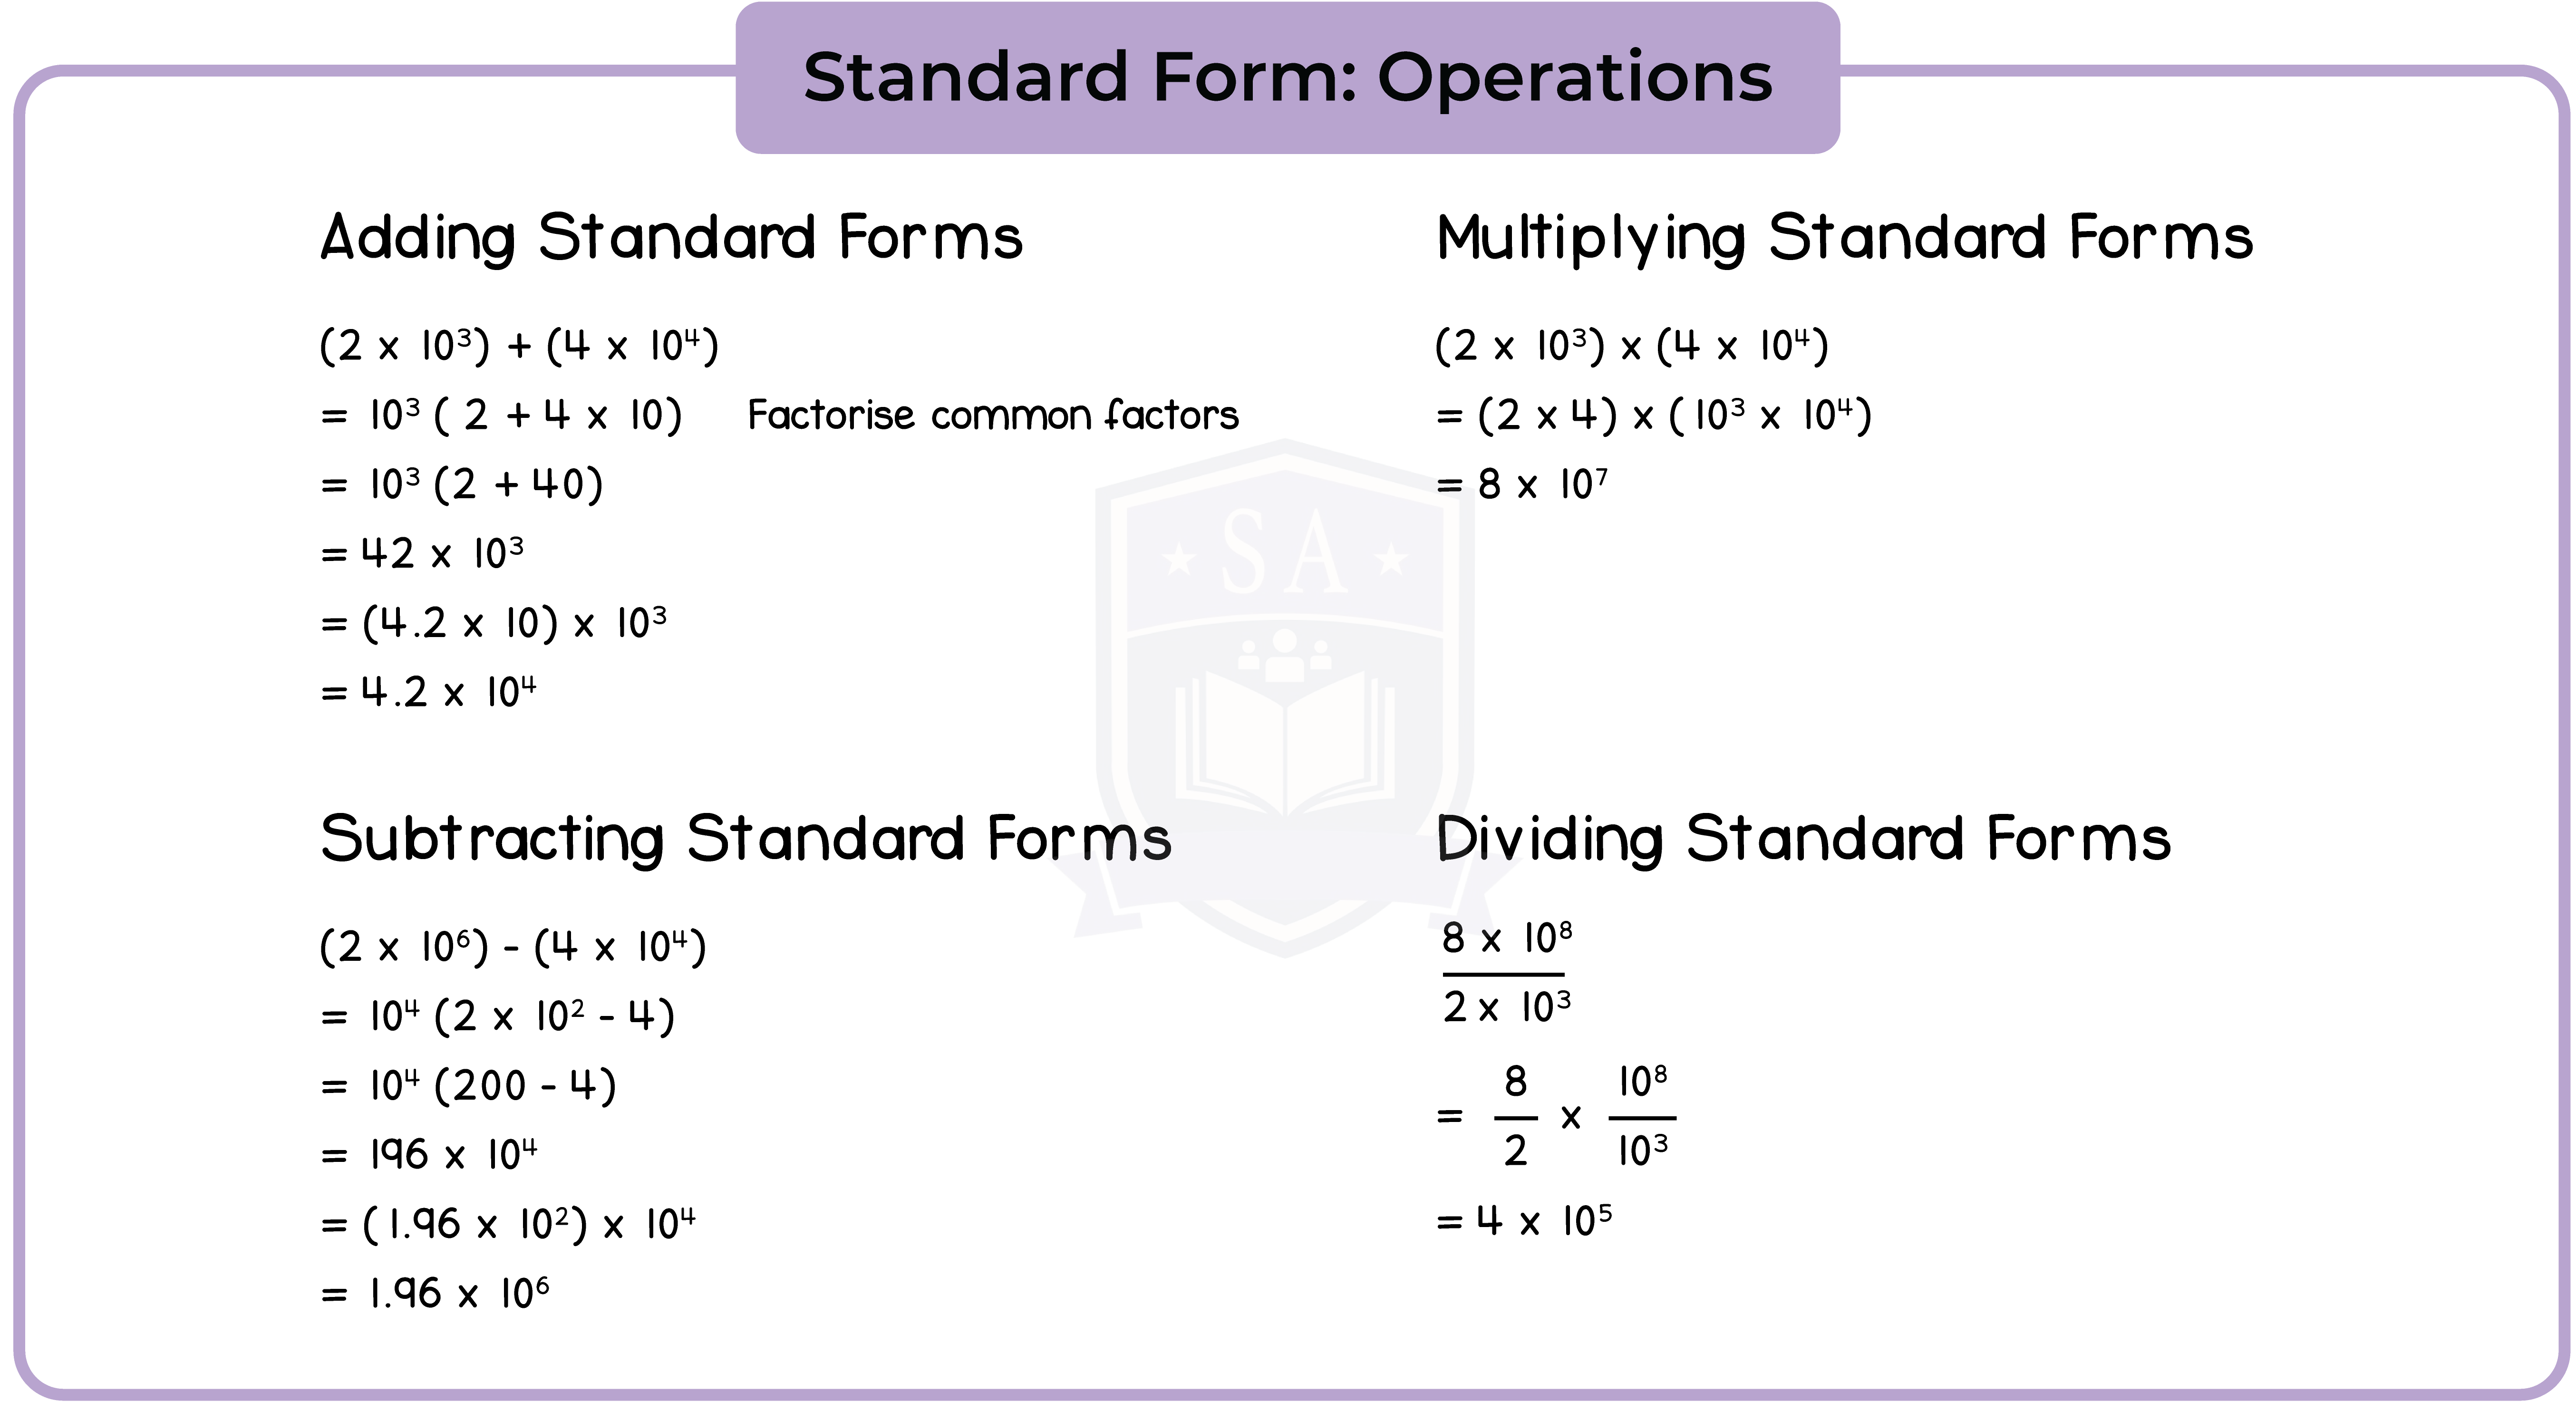 edexcel_igcse_mathematics a_topic 09_standard form_002_operations of standard forms